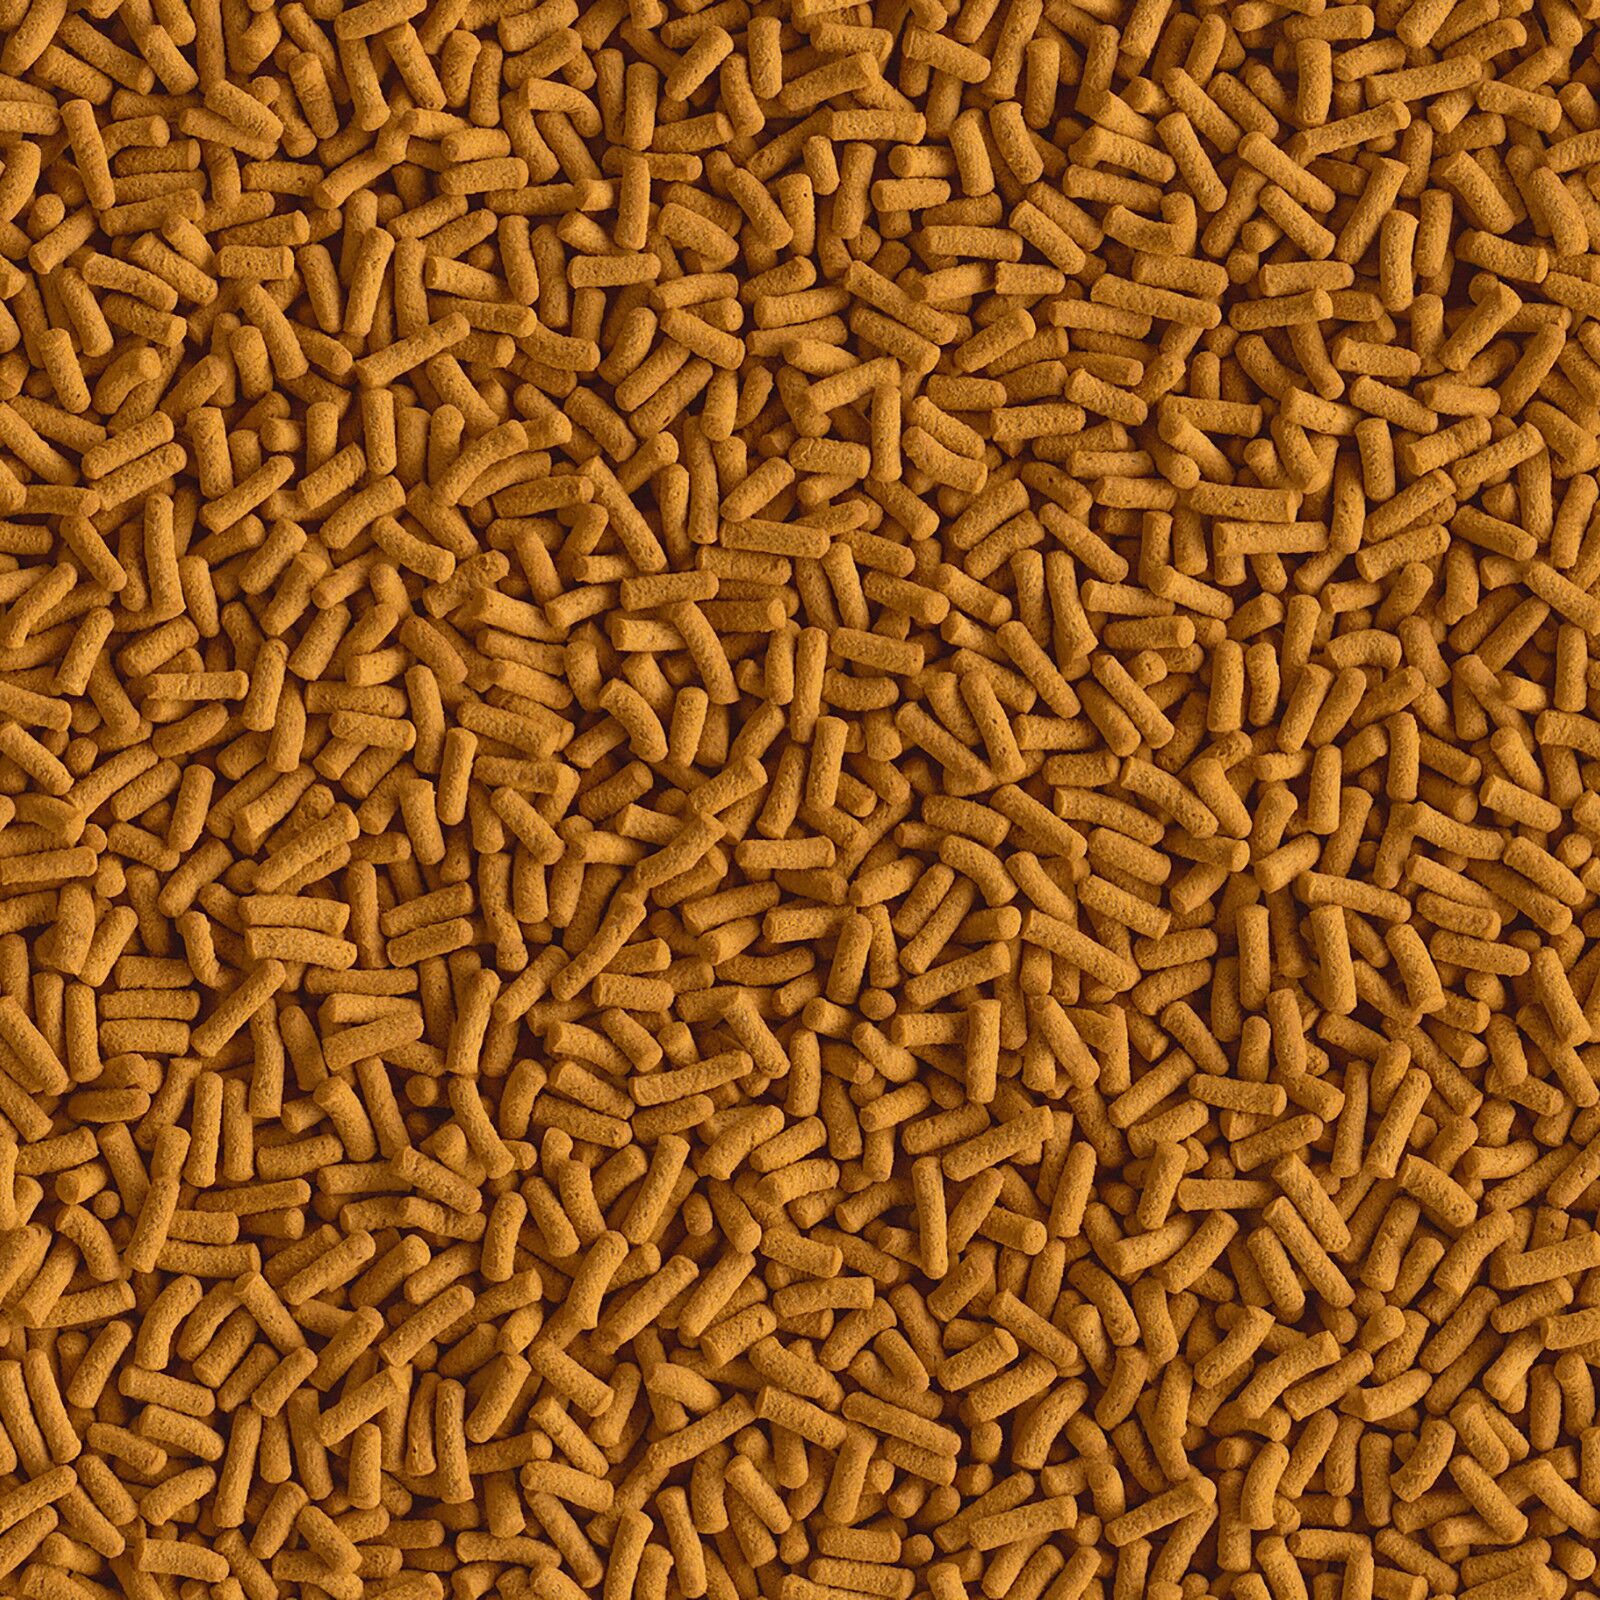 Tetra Cichlid granules 500 ml